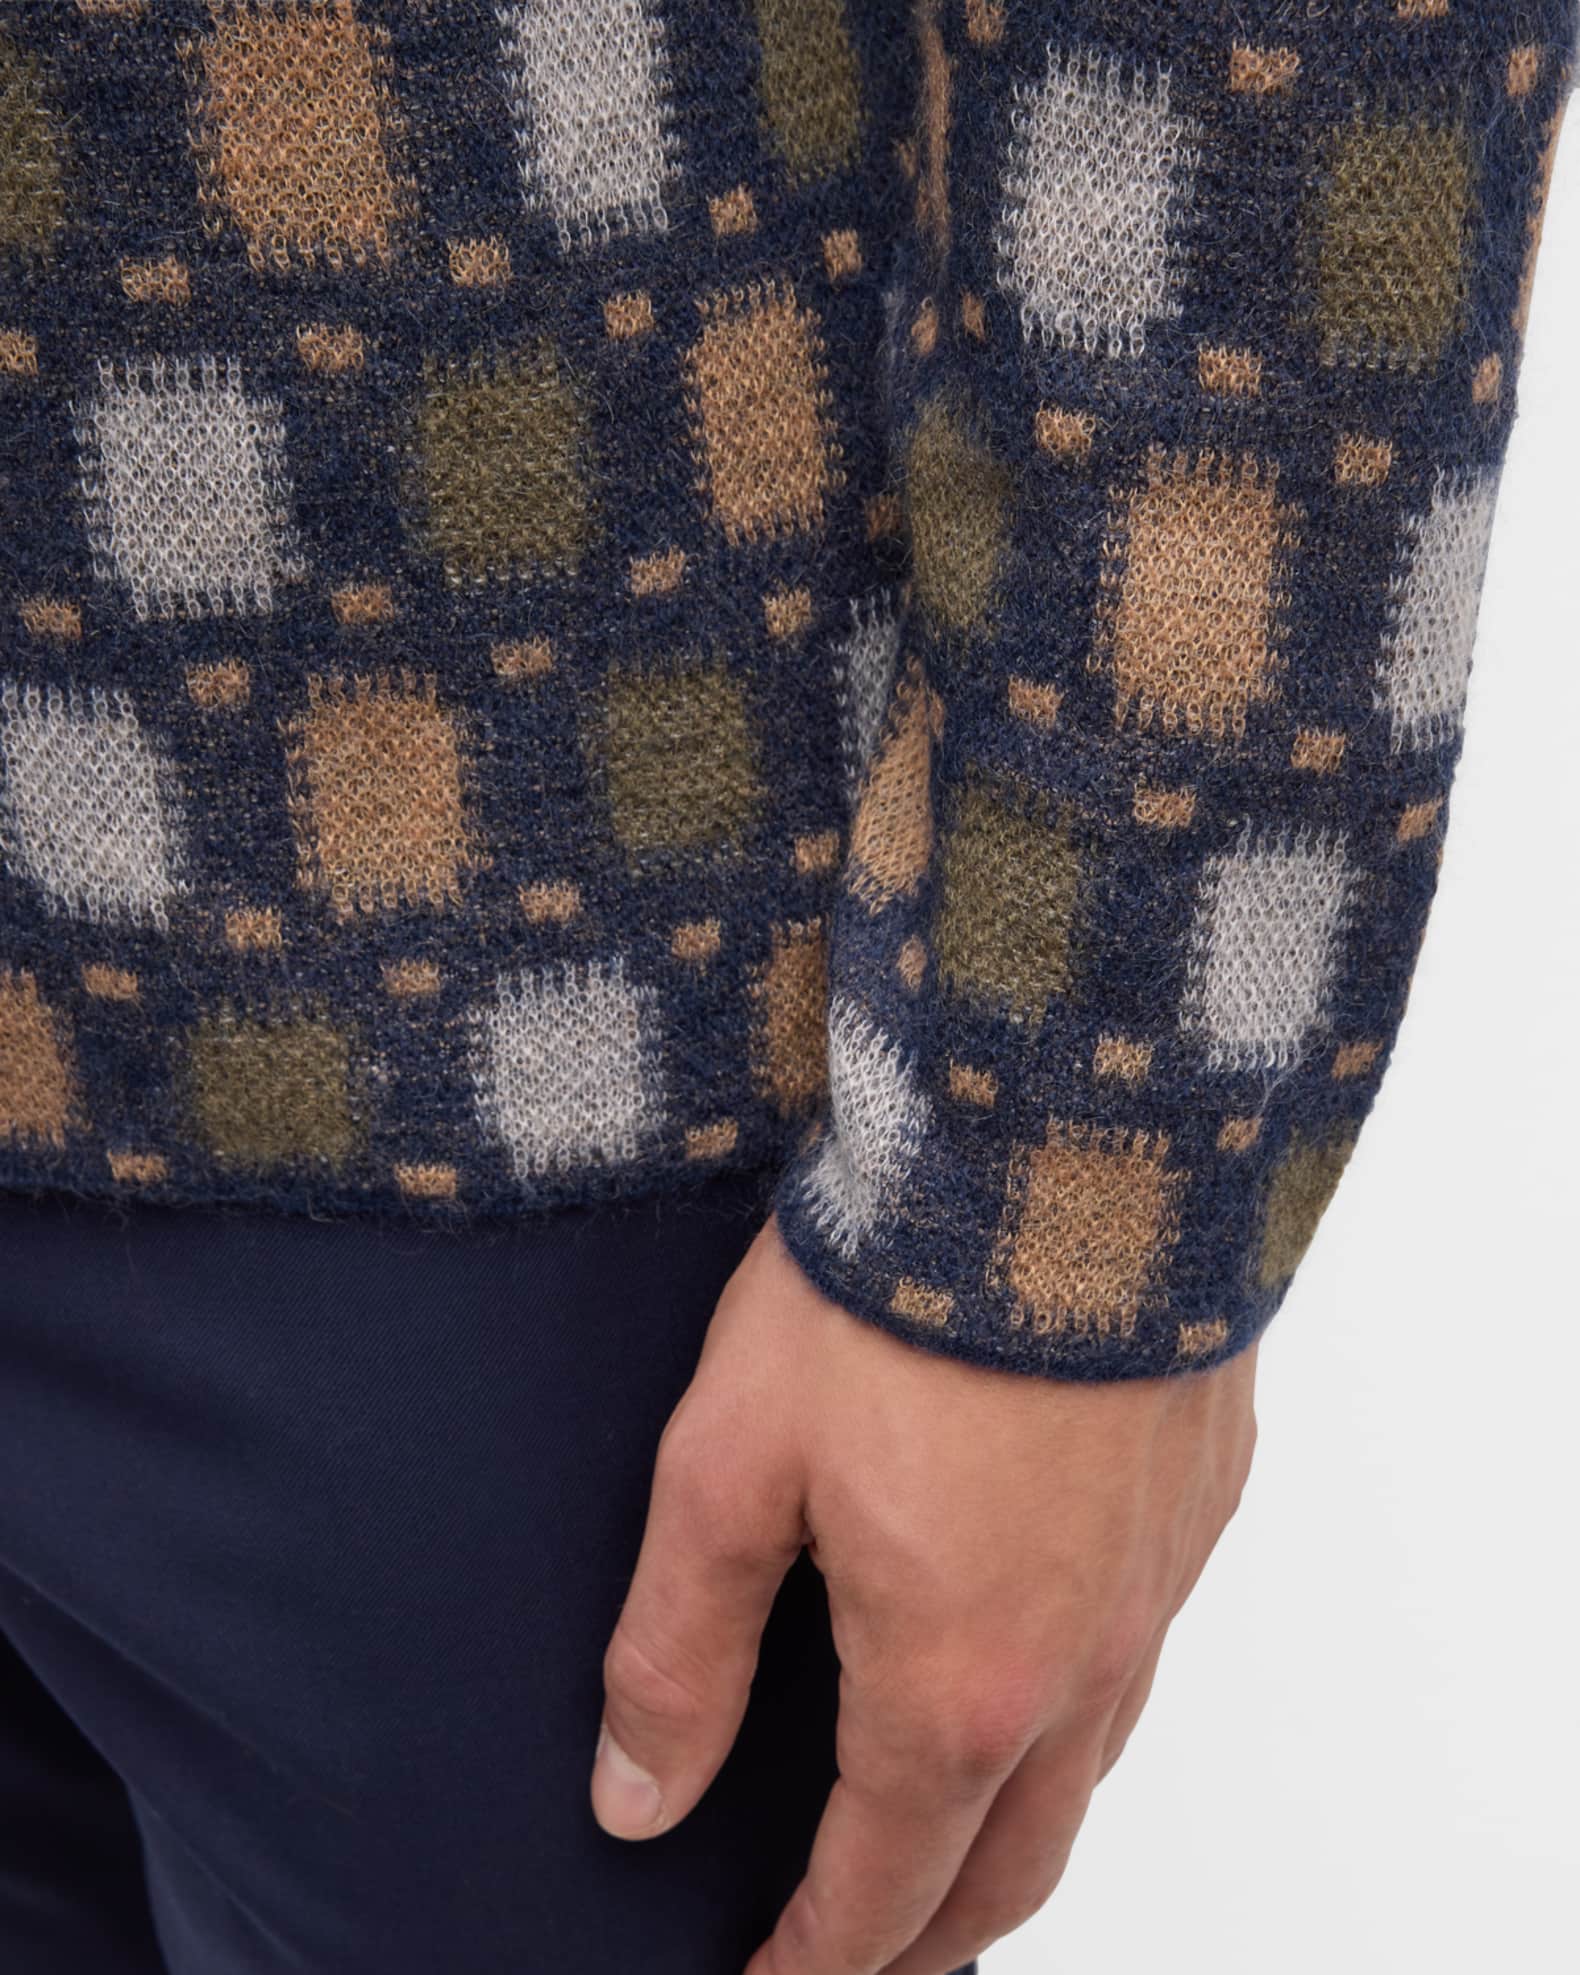 Giorgio Armani Men's Maglia Mohair and Wool Knit Pullover Sweater